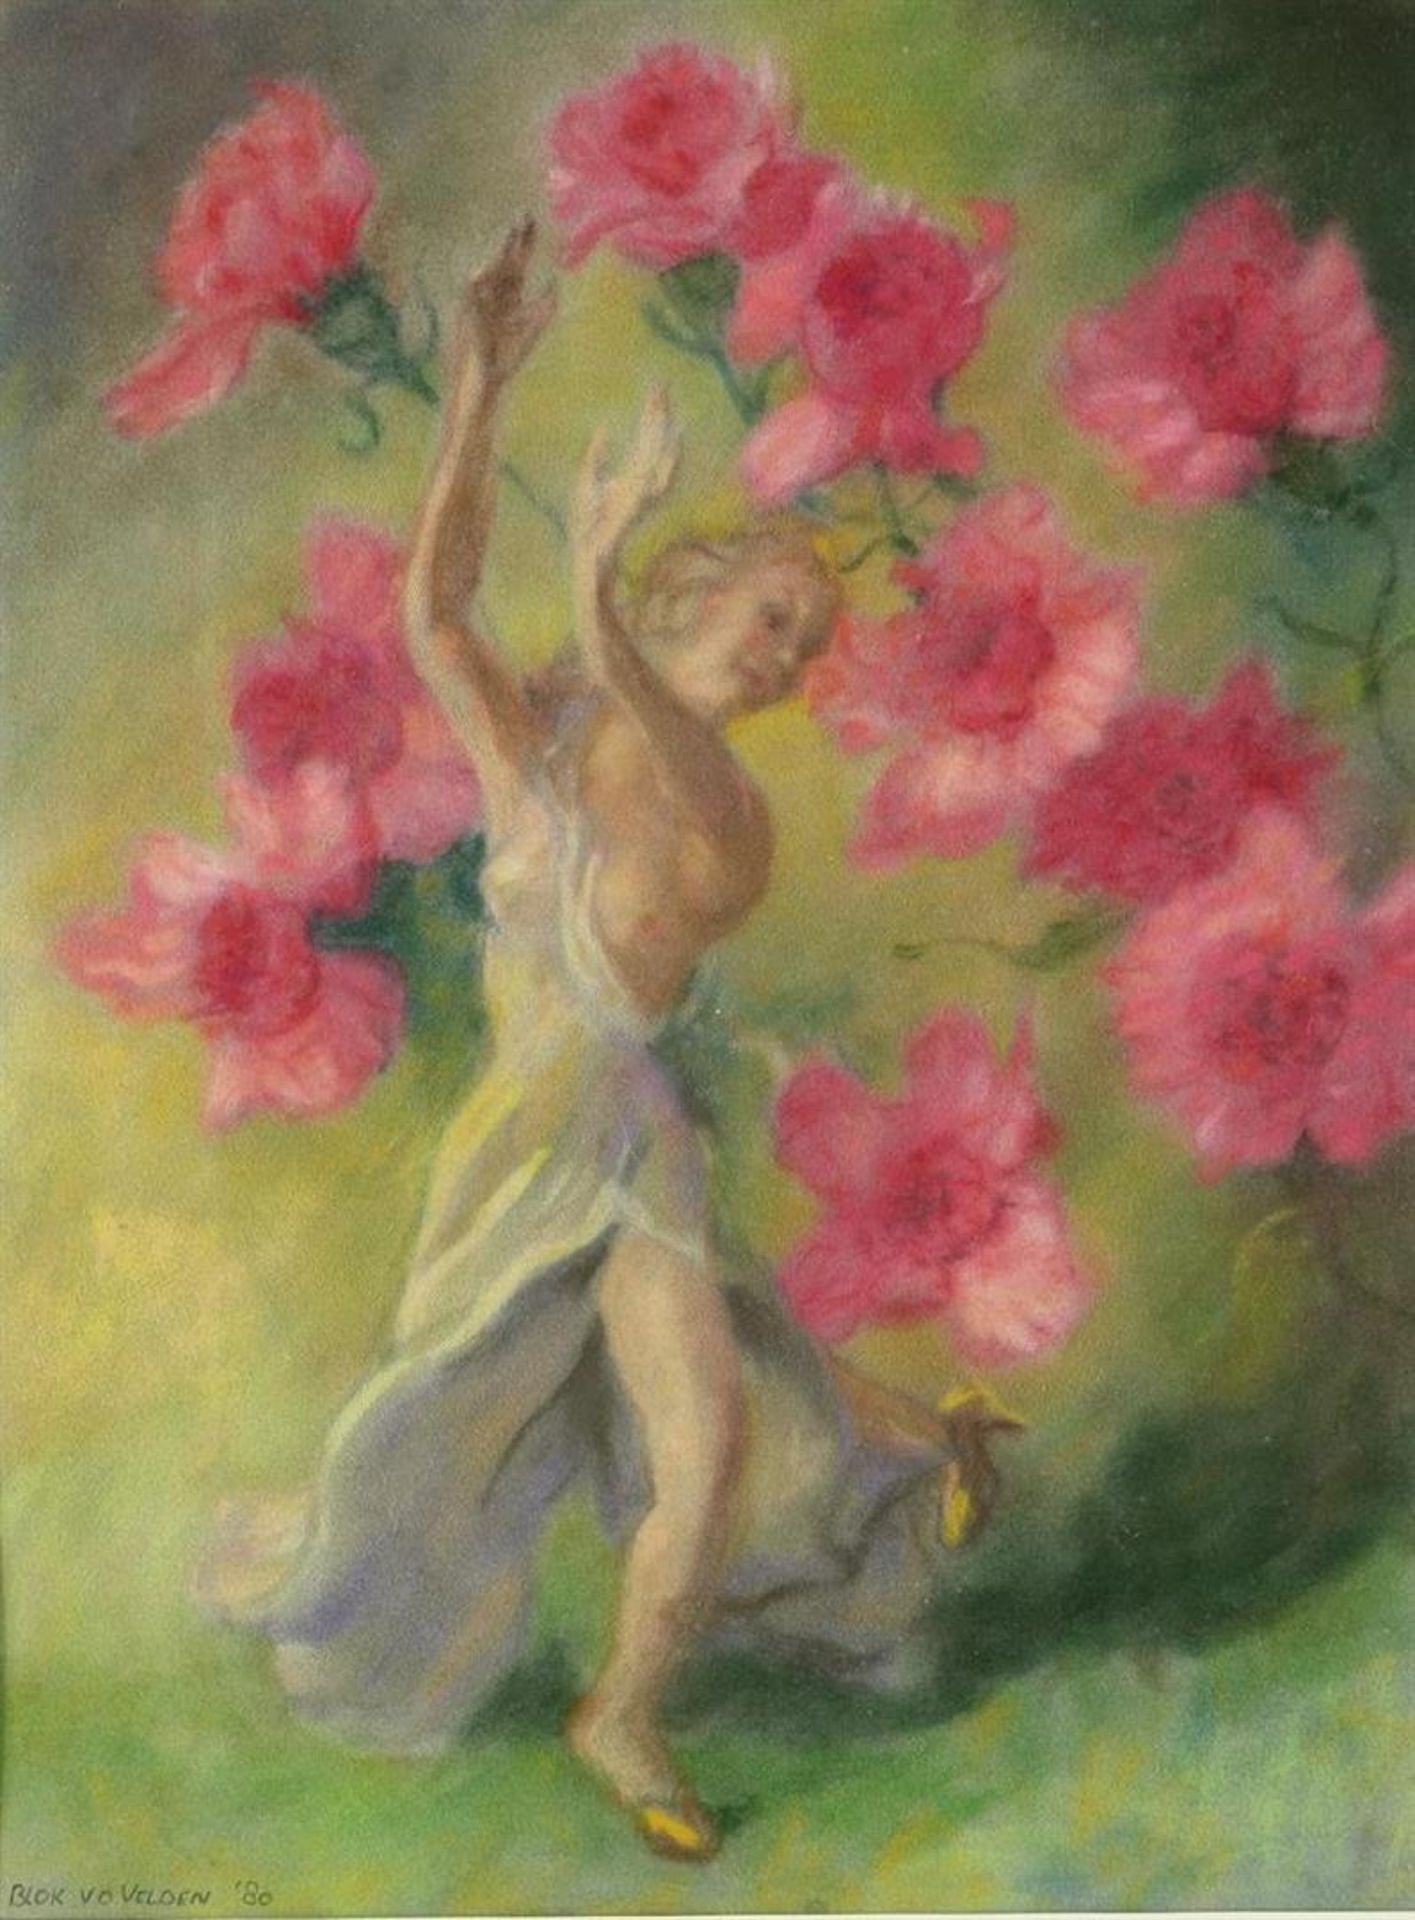 Ad Blok van der Velden (1913-1980) Female figure with flowers, signed lower left, 1980, pastel on